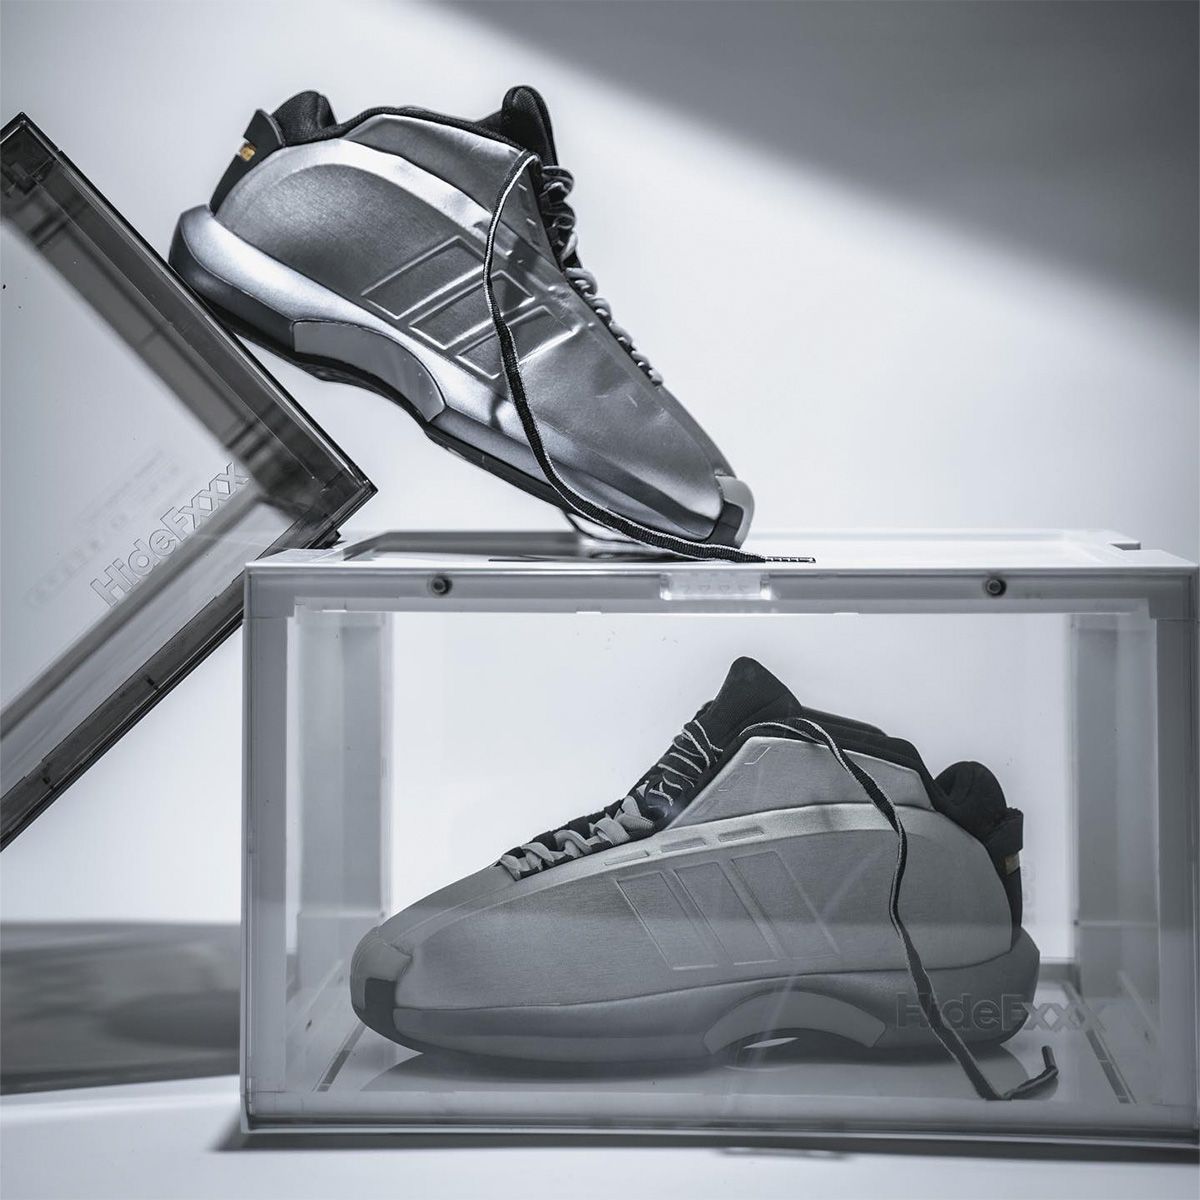 Where to Buy Kobe Bryant's OG adidas Crazy 1 “Metallic Silver” | House of